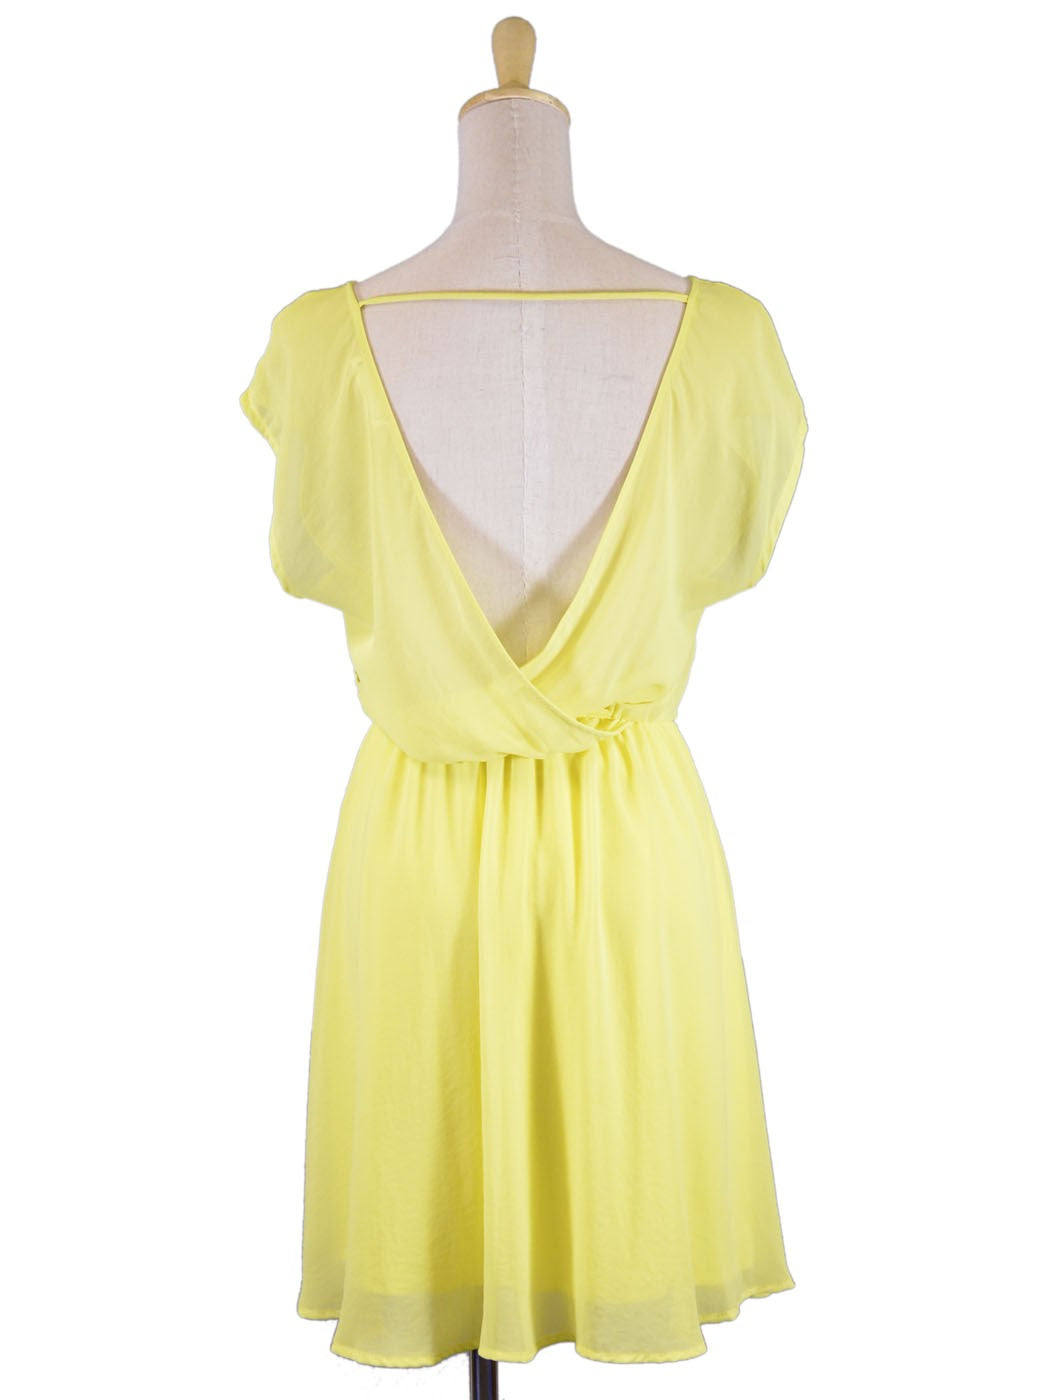 Lush Flavescent Lemon Side Lace Detail Elastic Waist Chiffon Summer Dress